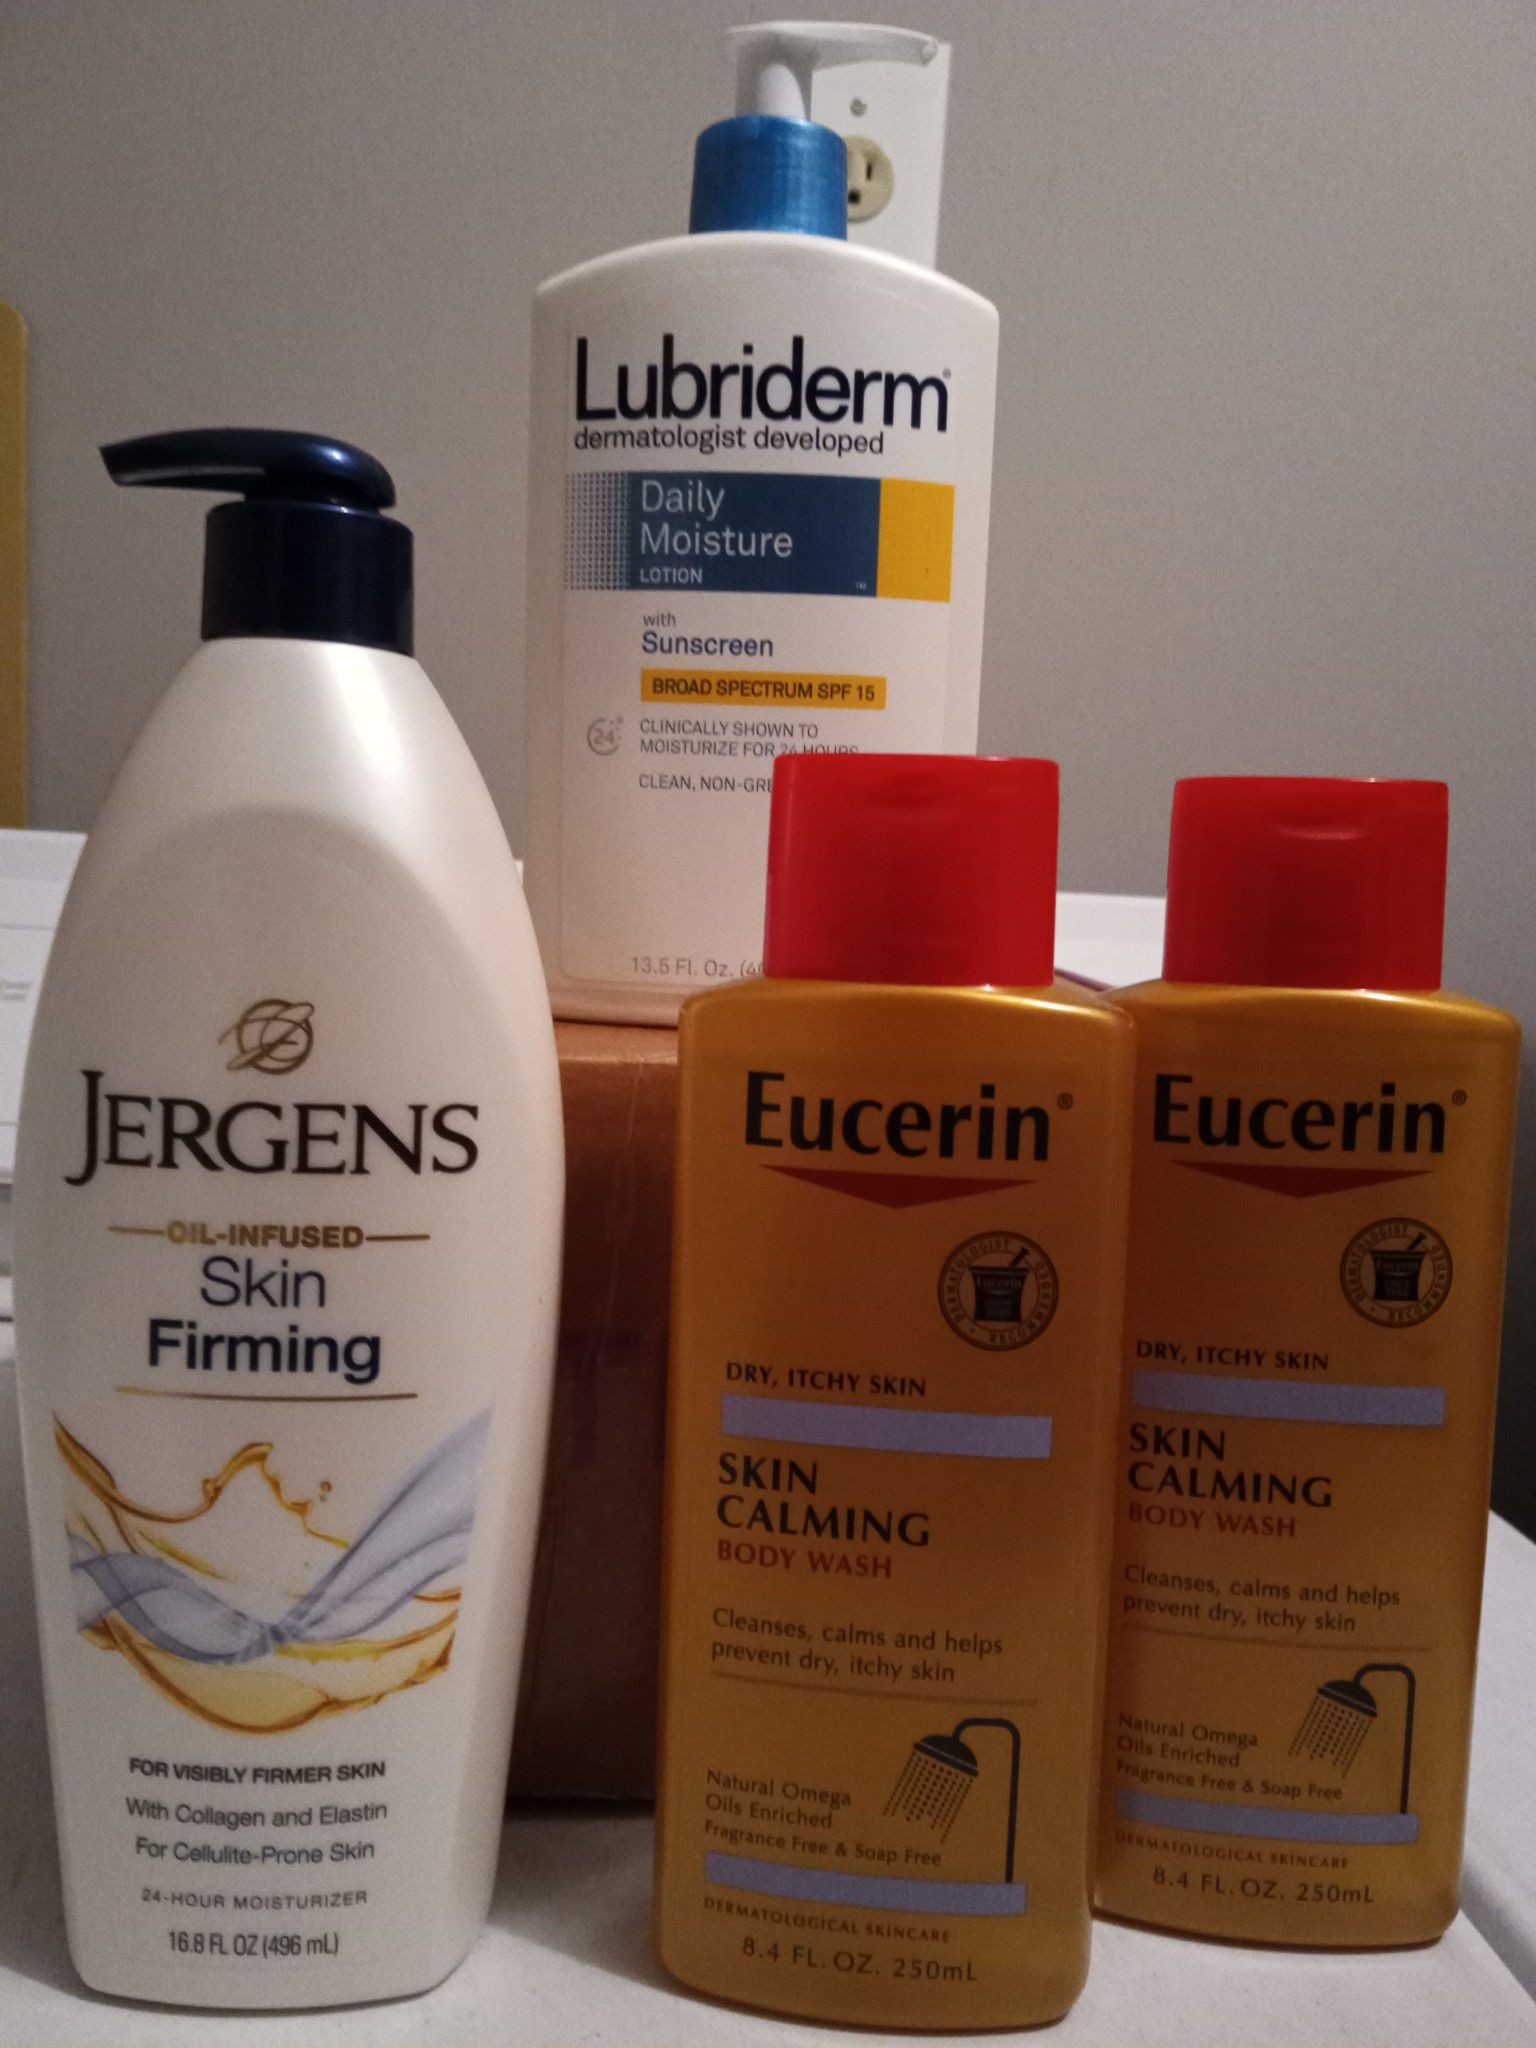 Eucerin Bodywash, Jergens and Lubriderm Lotions